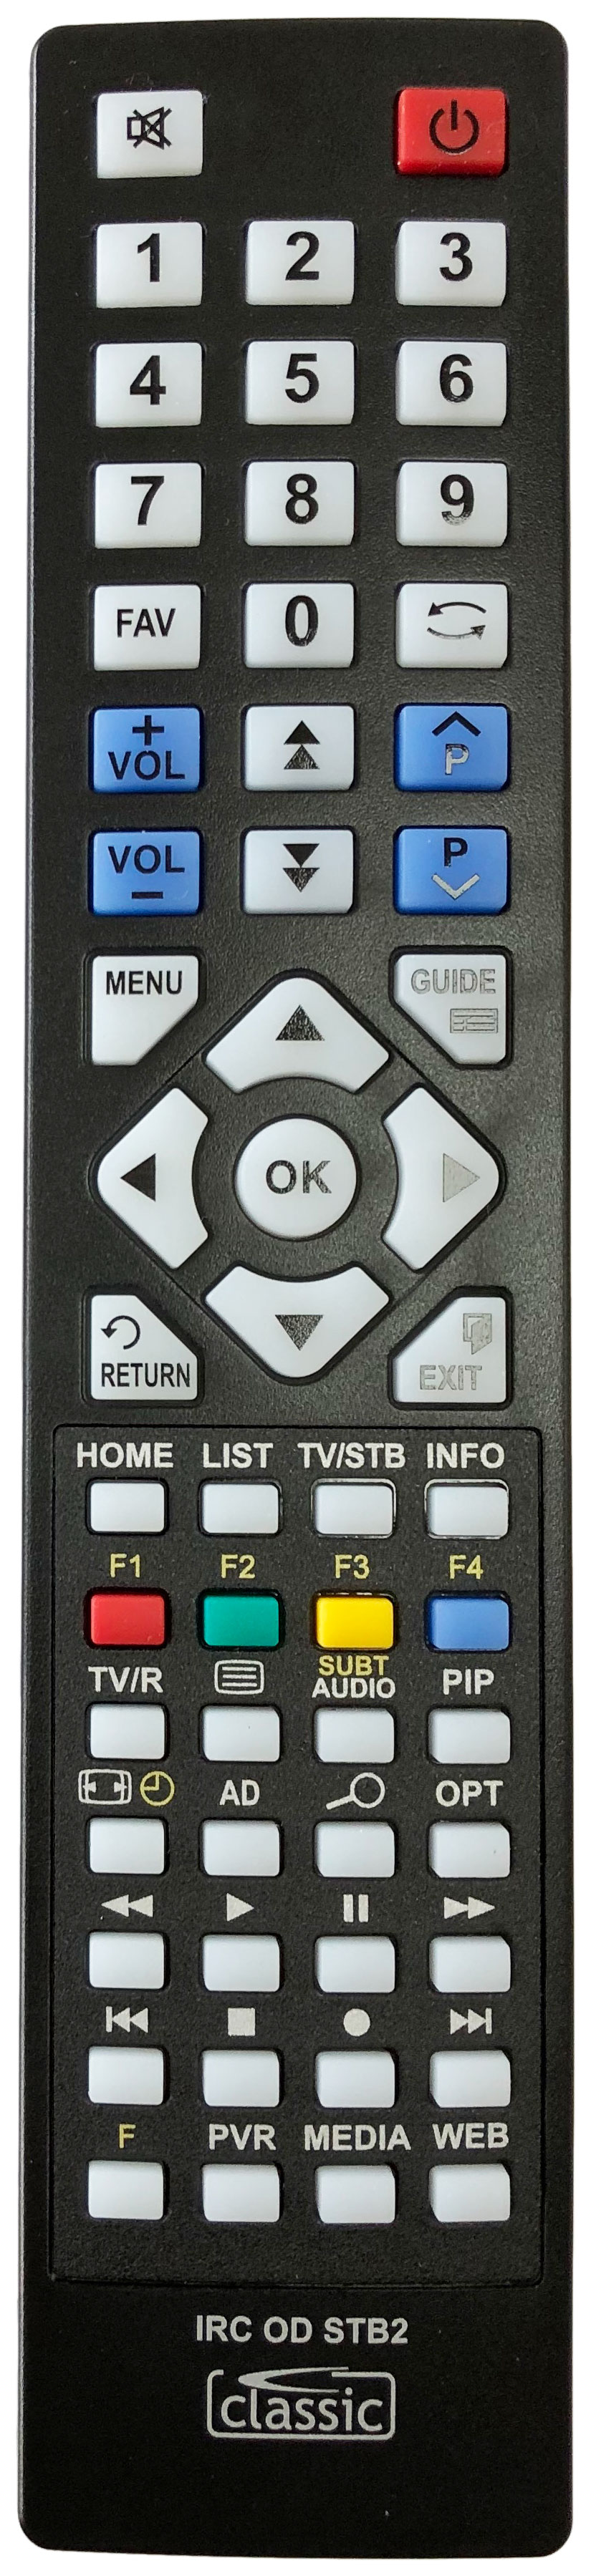 LOGISAT 1100HD Remote Control Alternative